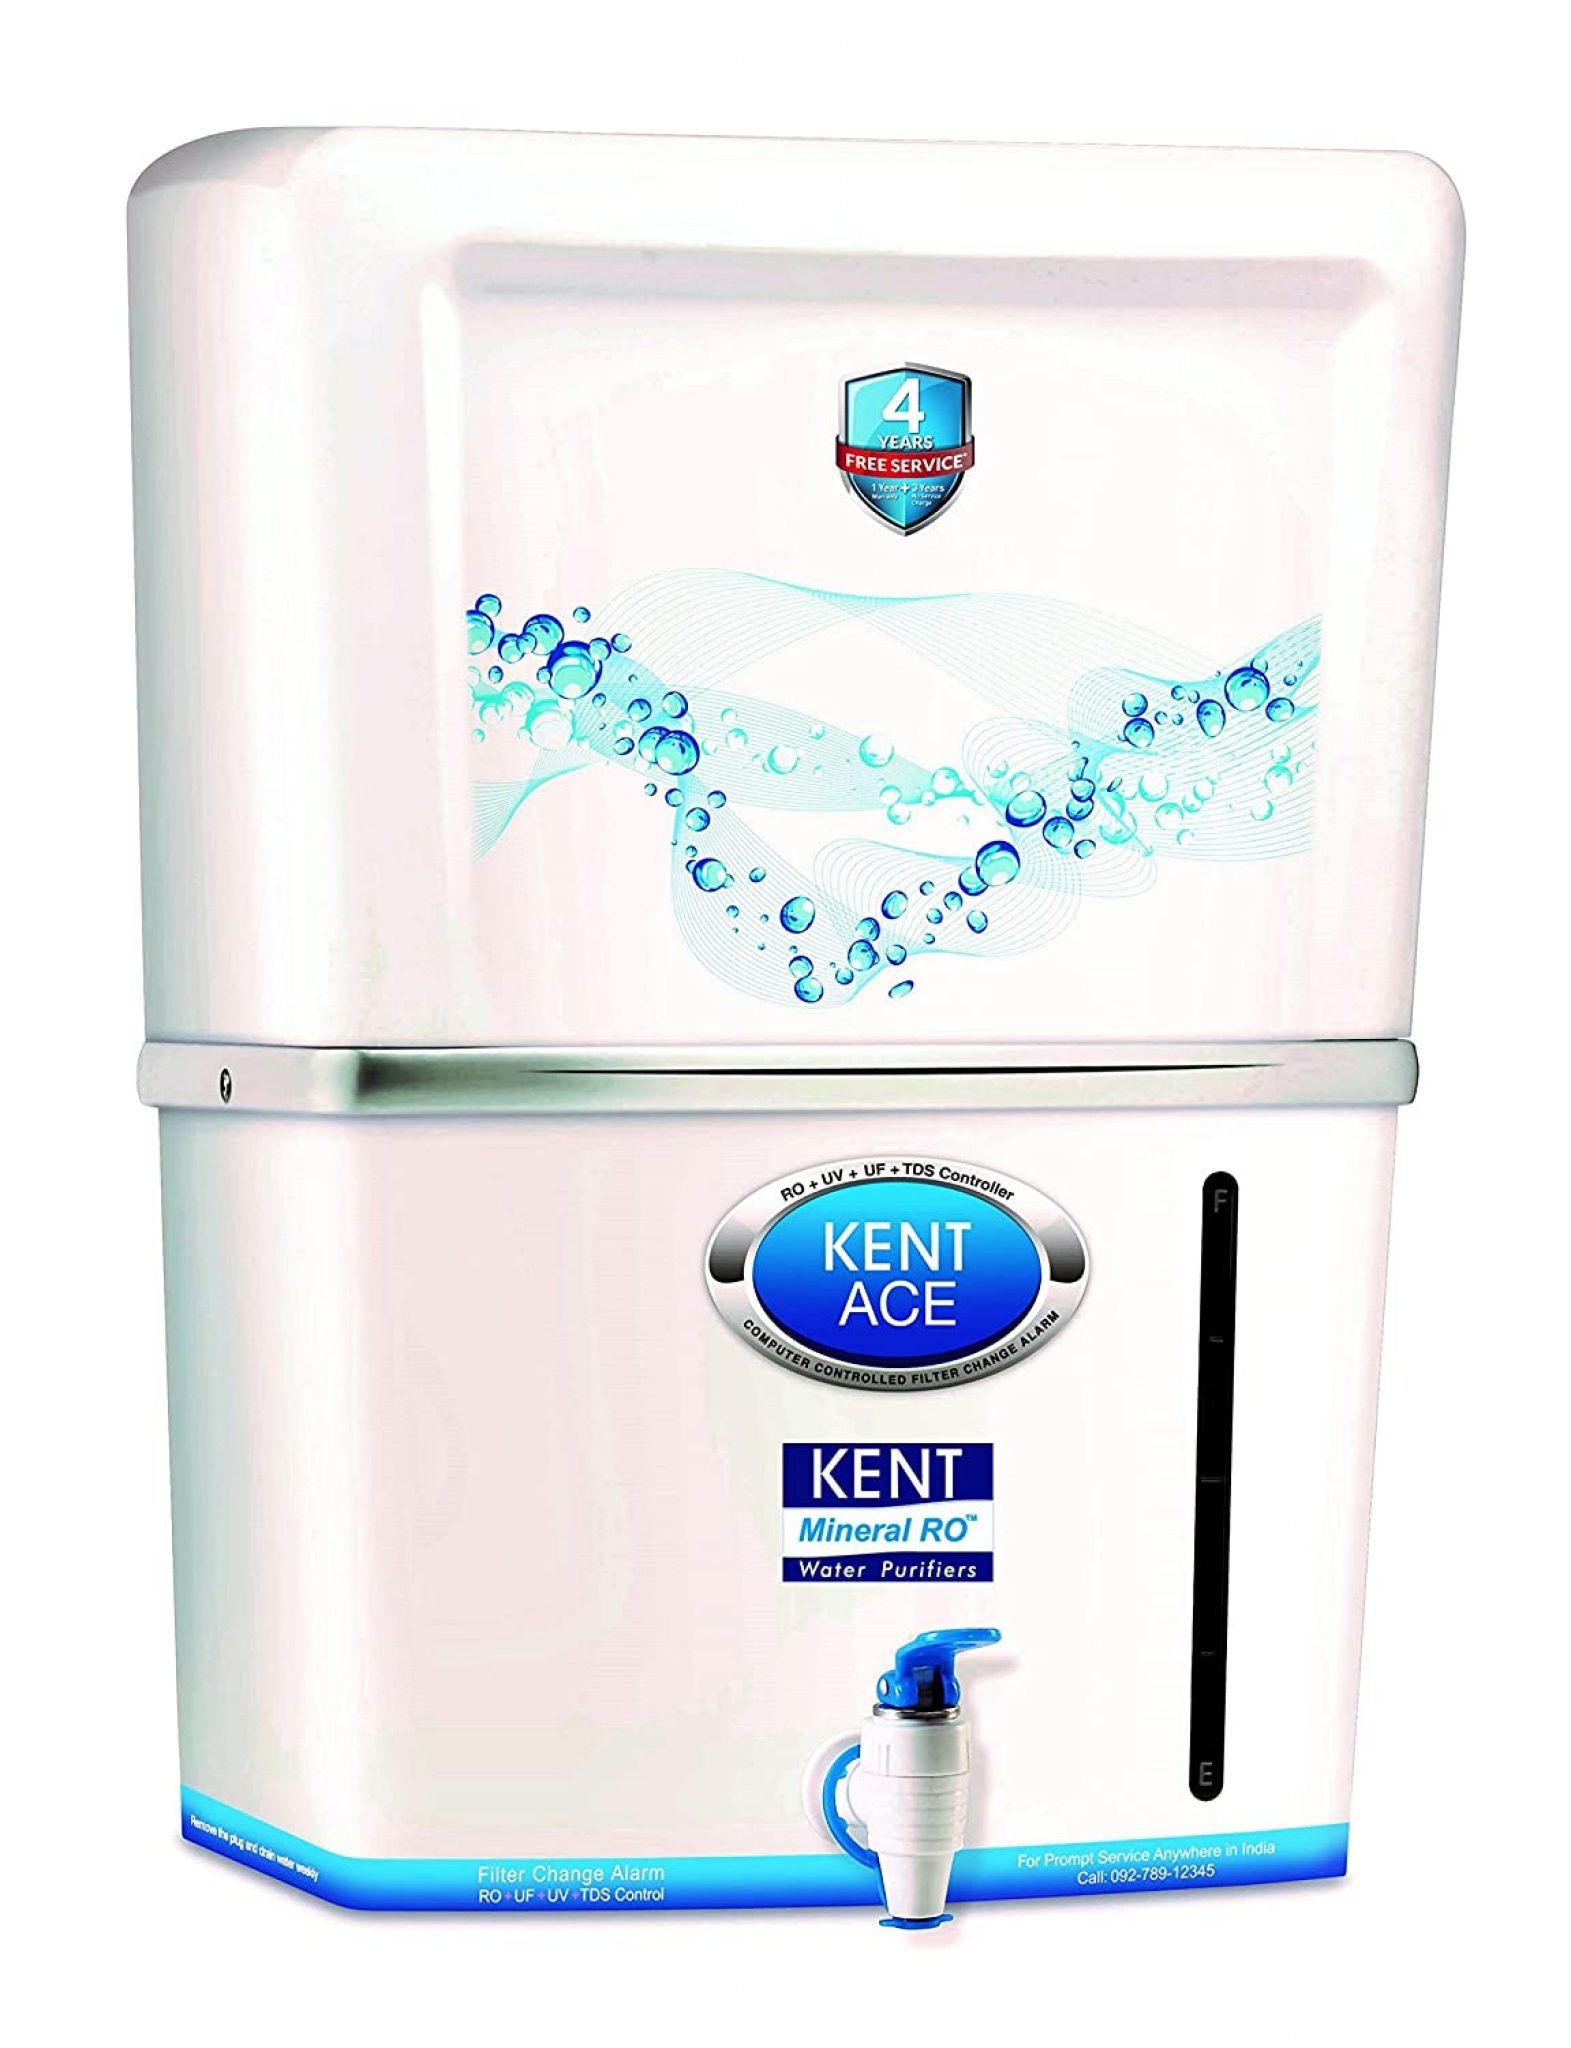 Kent Ace Mineral 7Litre 60Watt RO+UV+UF Water Purifier Review